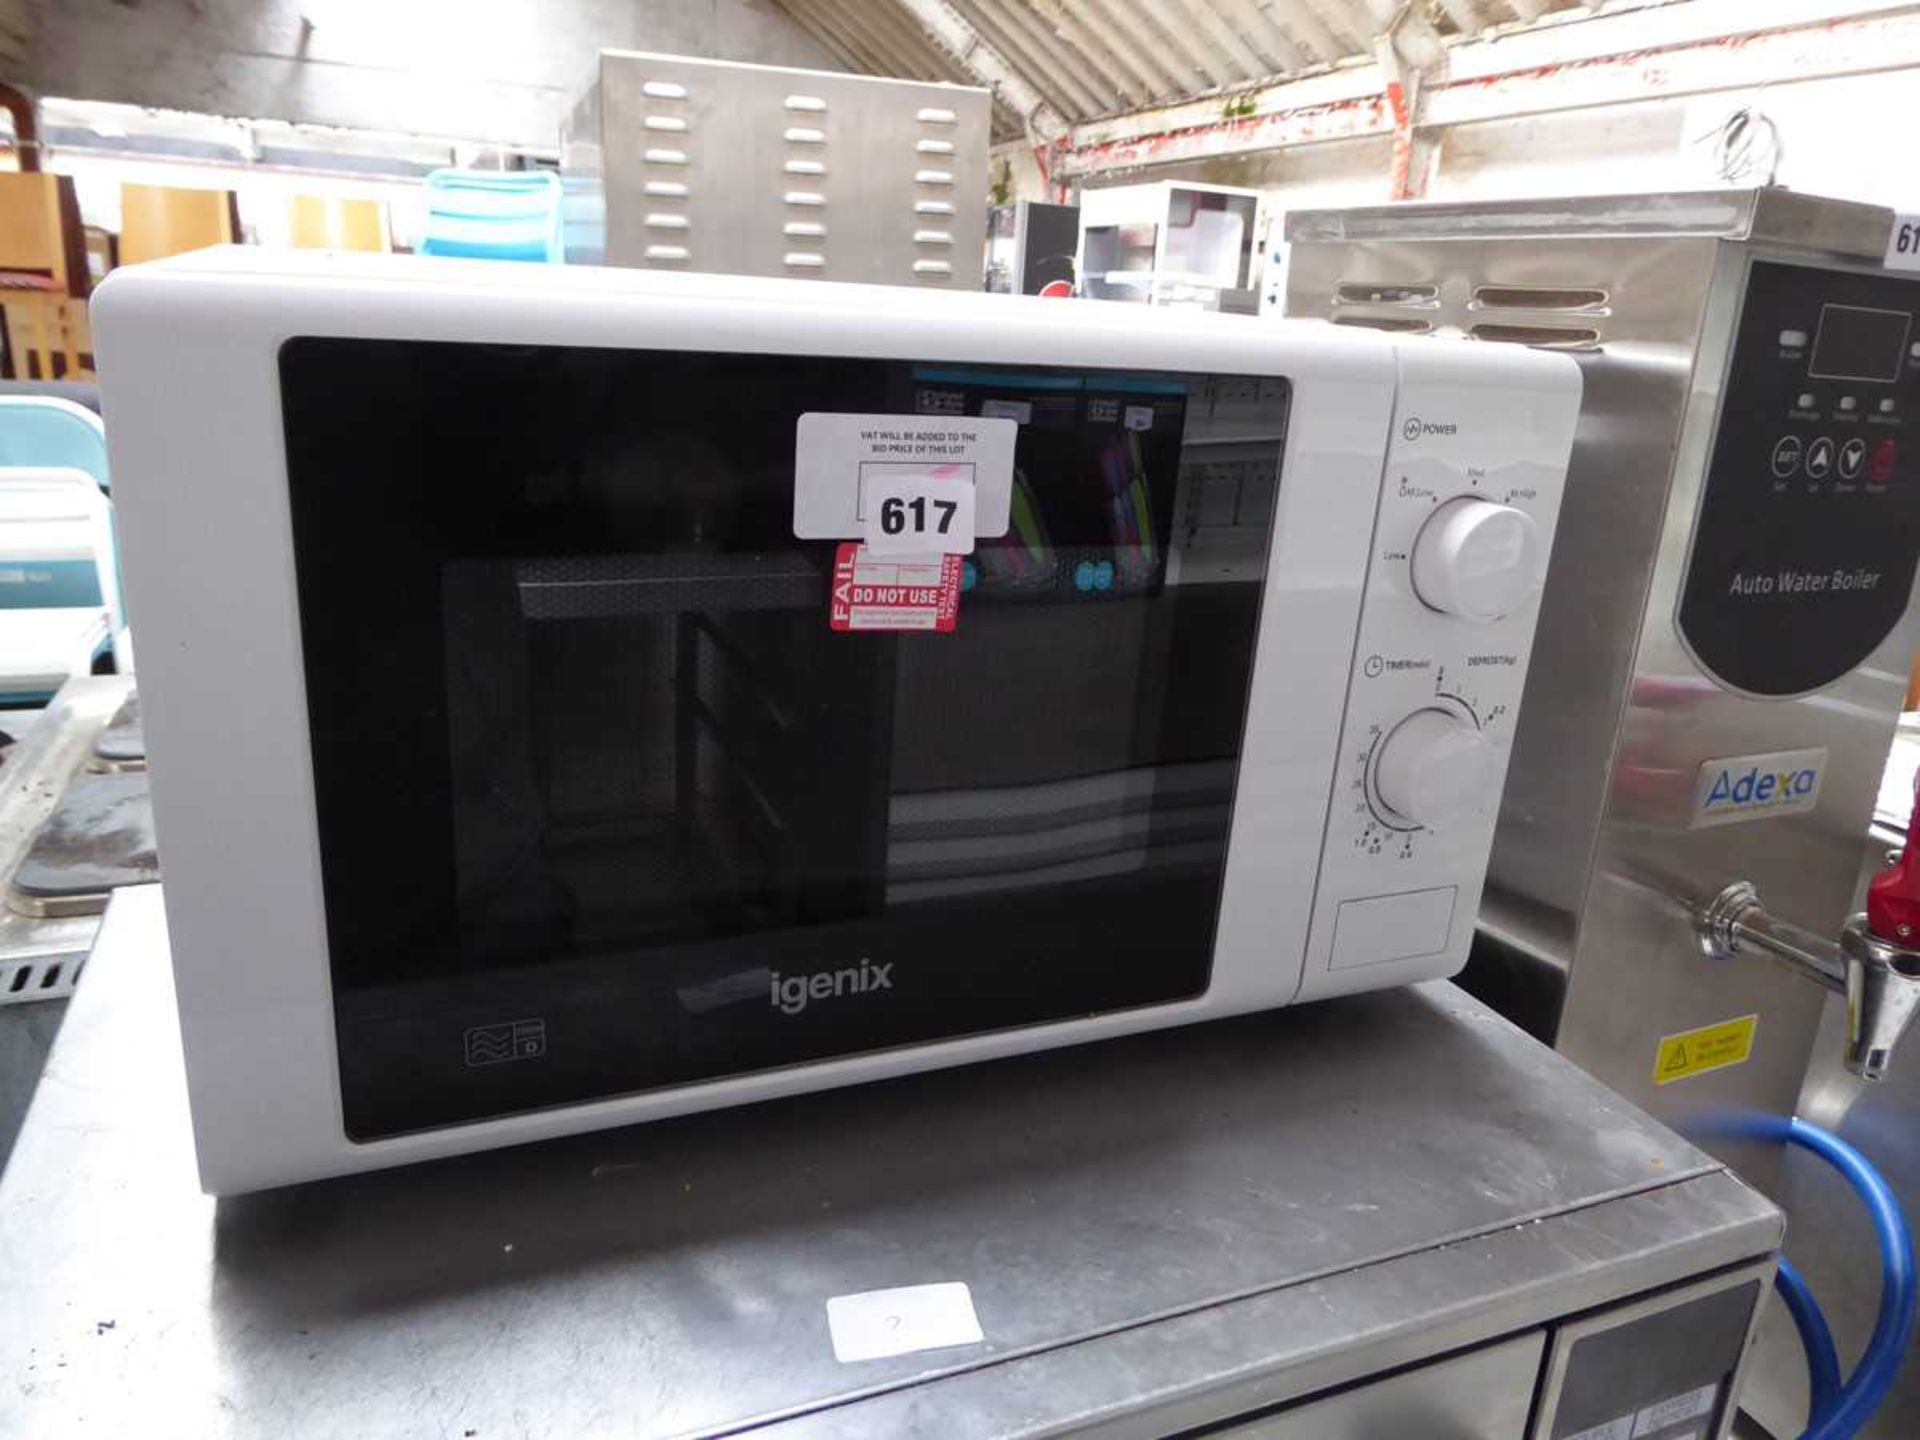 +VAT 44cm Igenix domestic microwave (FAILED)